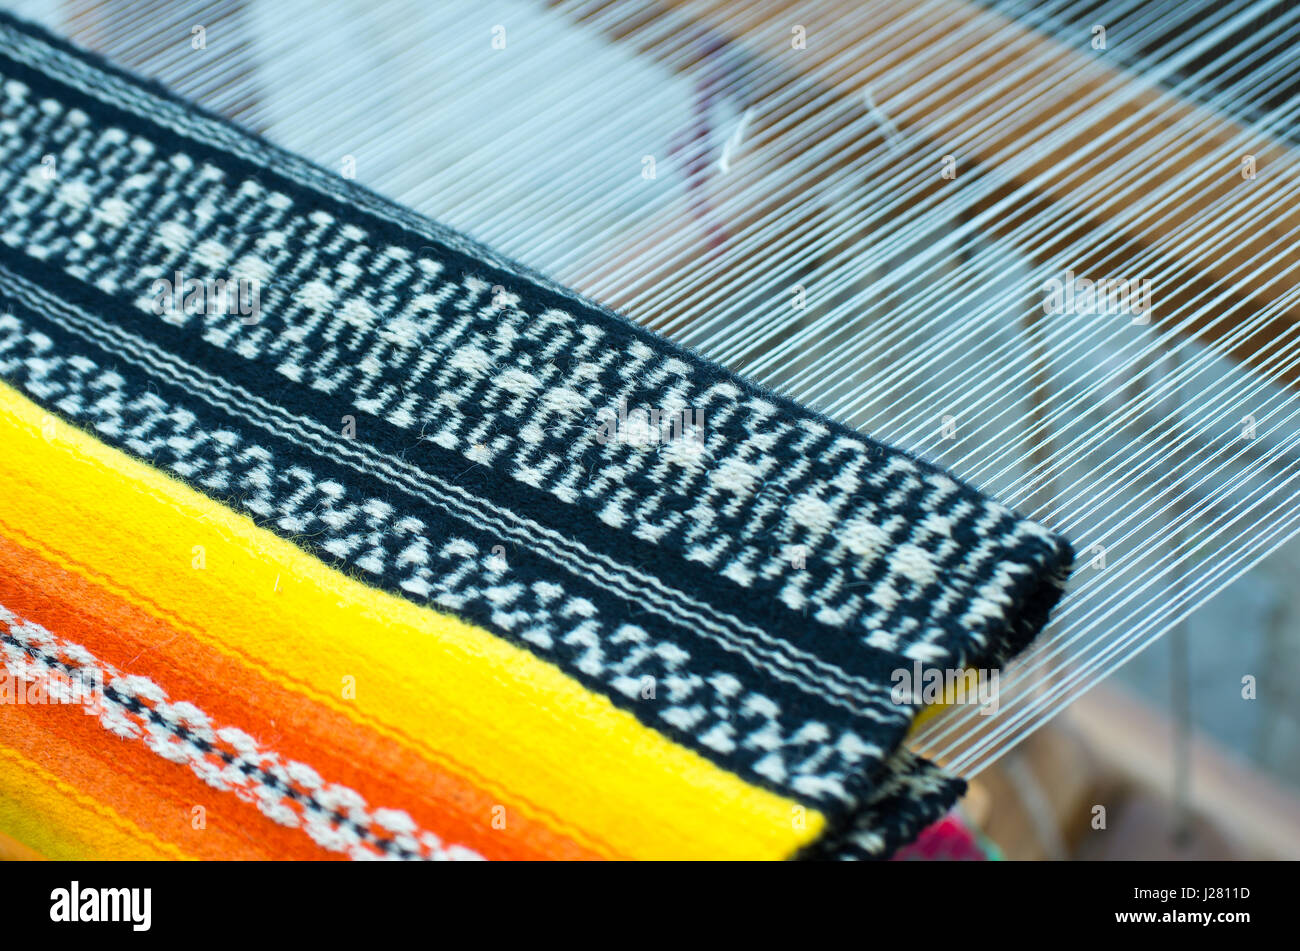 Hand weaving loom Stock Photo